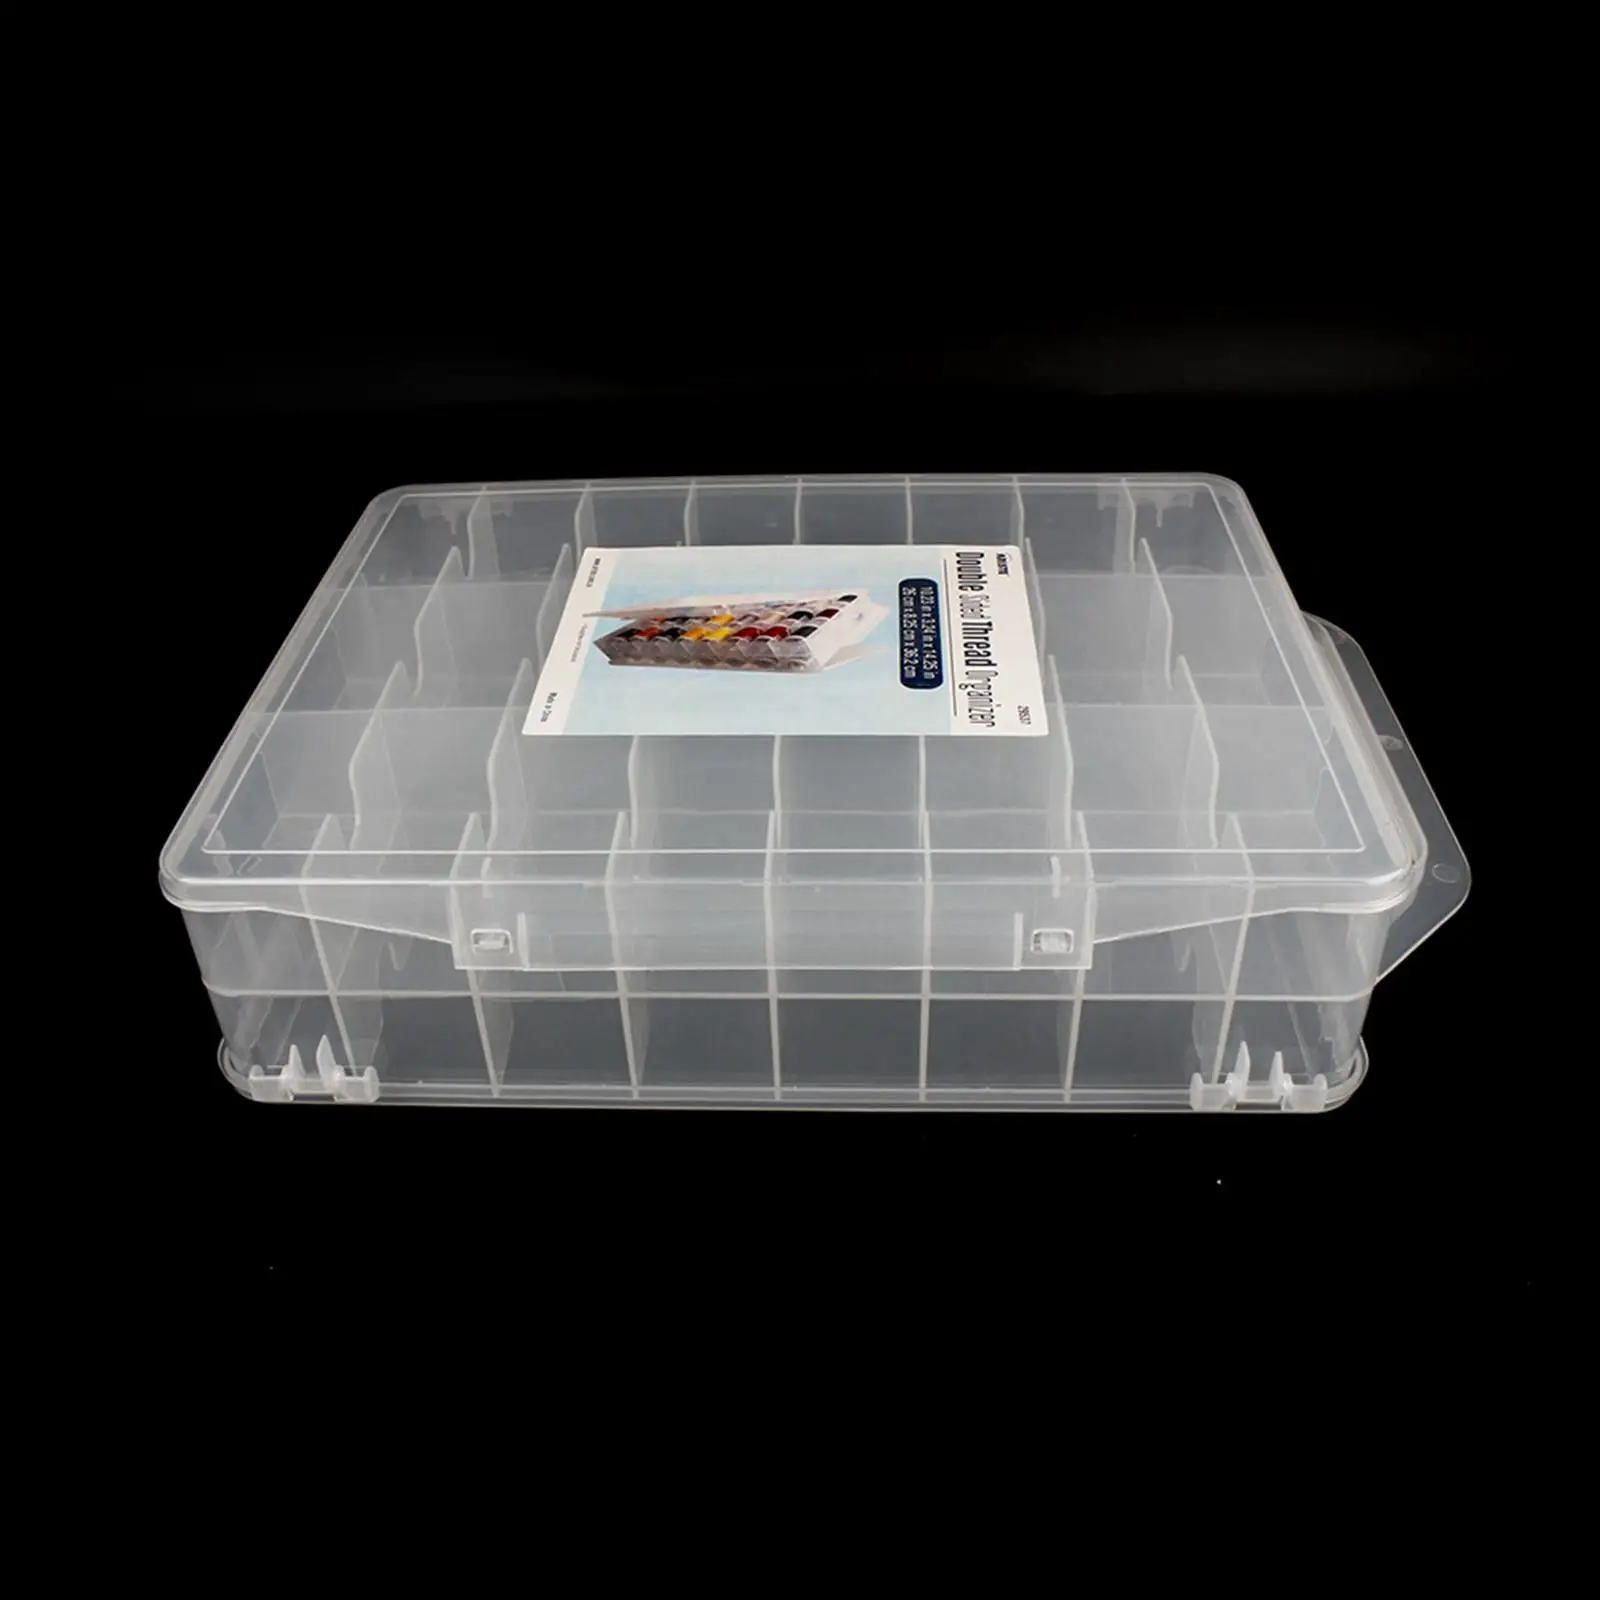 46 Grids   Box Case Jewelry Bead Storage Container Craft Organizer